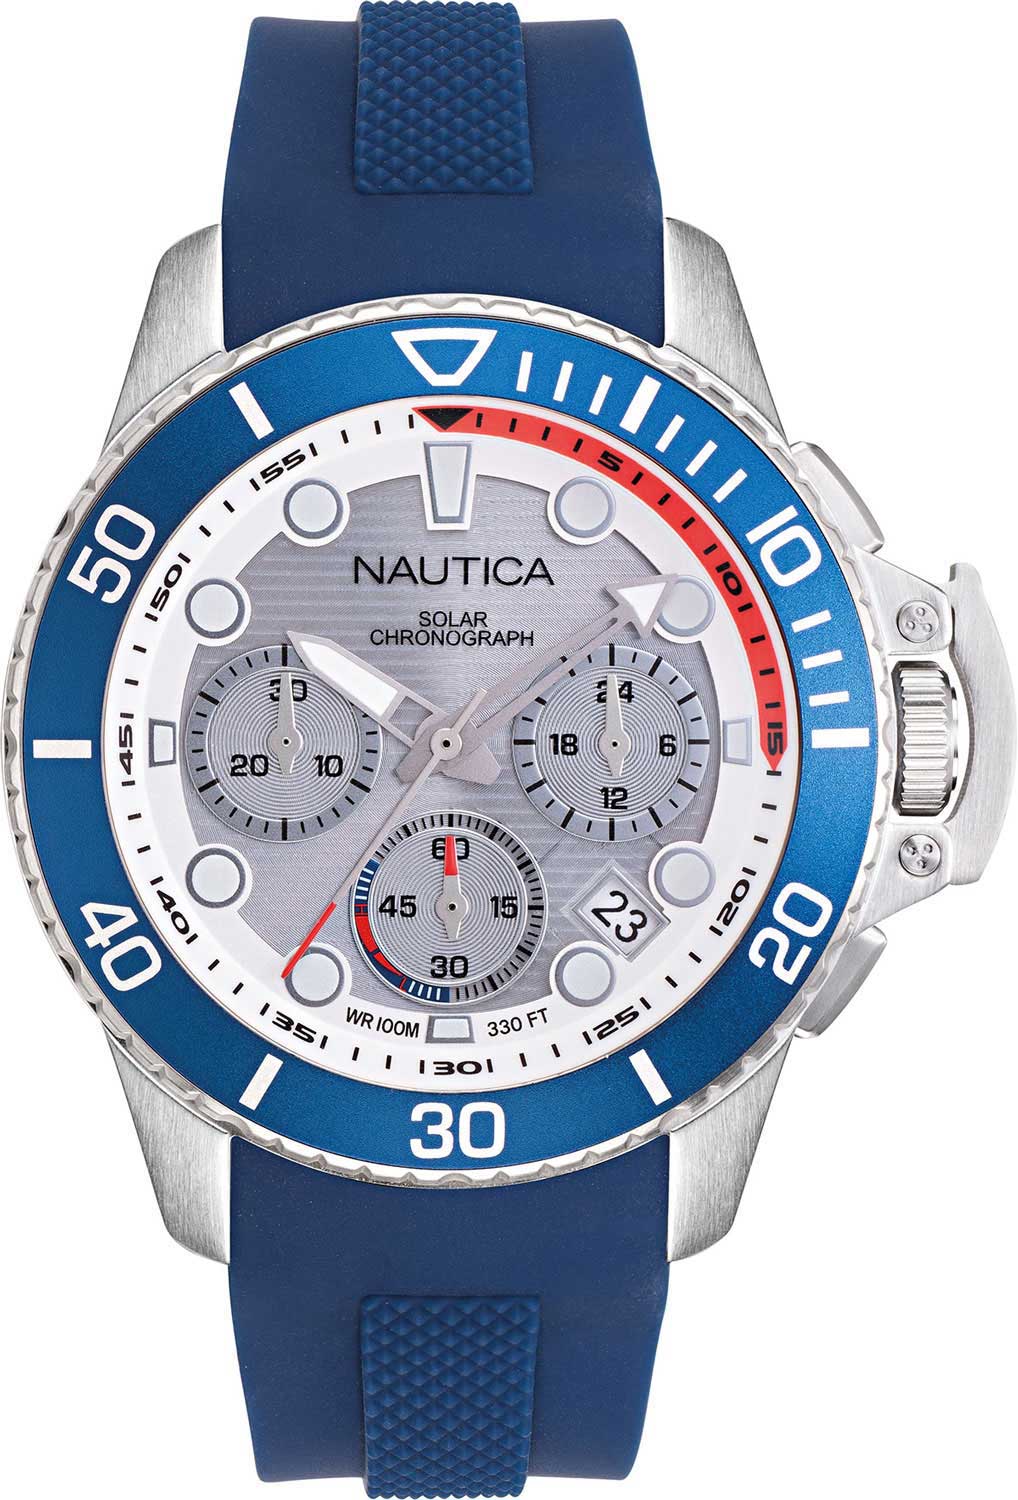 Фото часов Мужские часы Nautica Bayside Chrono Solar NAPBSC905